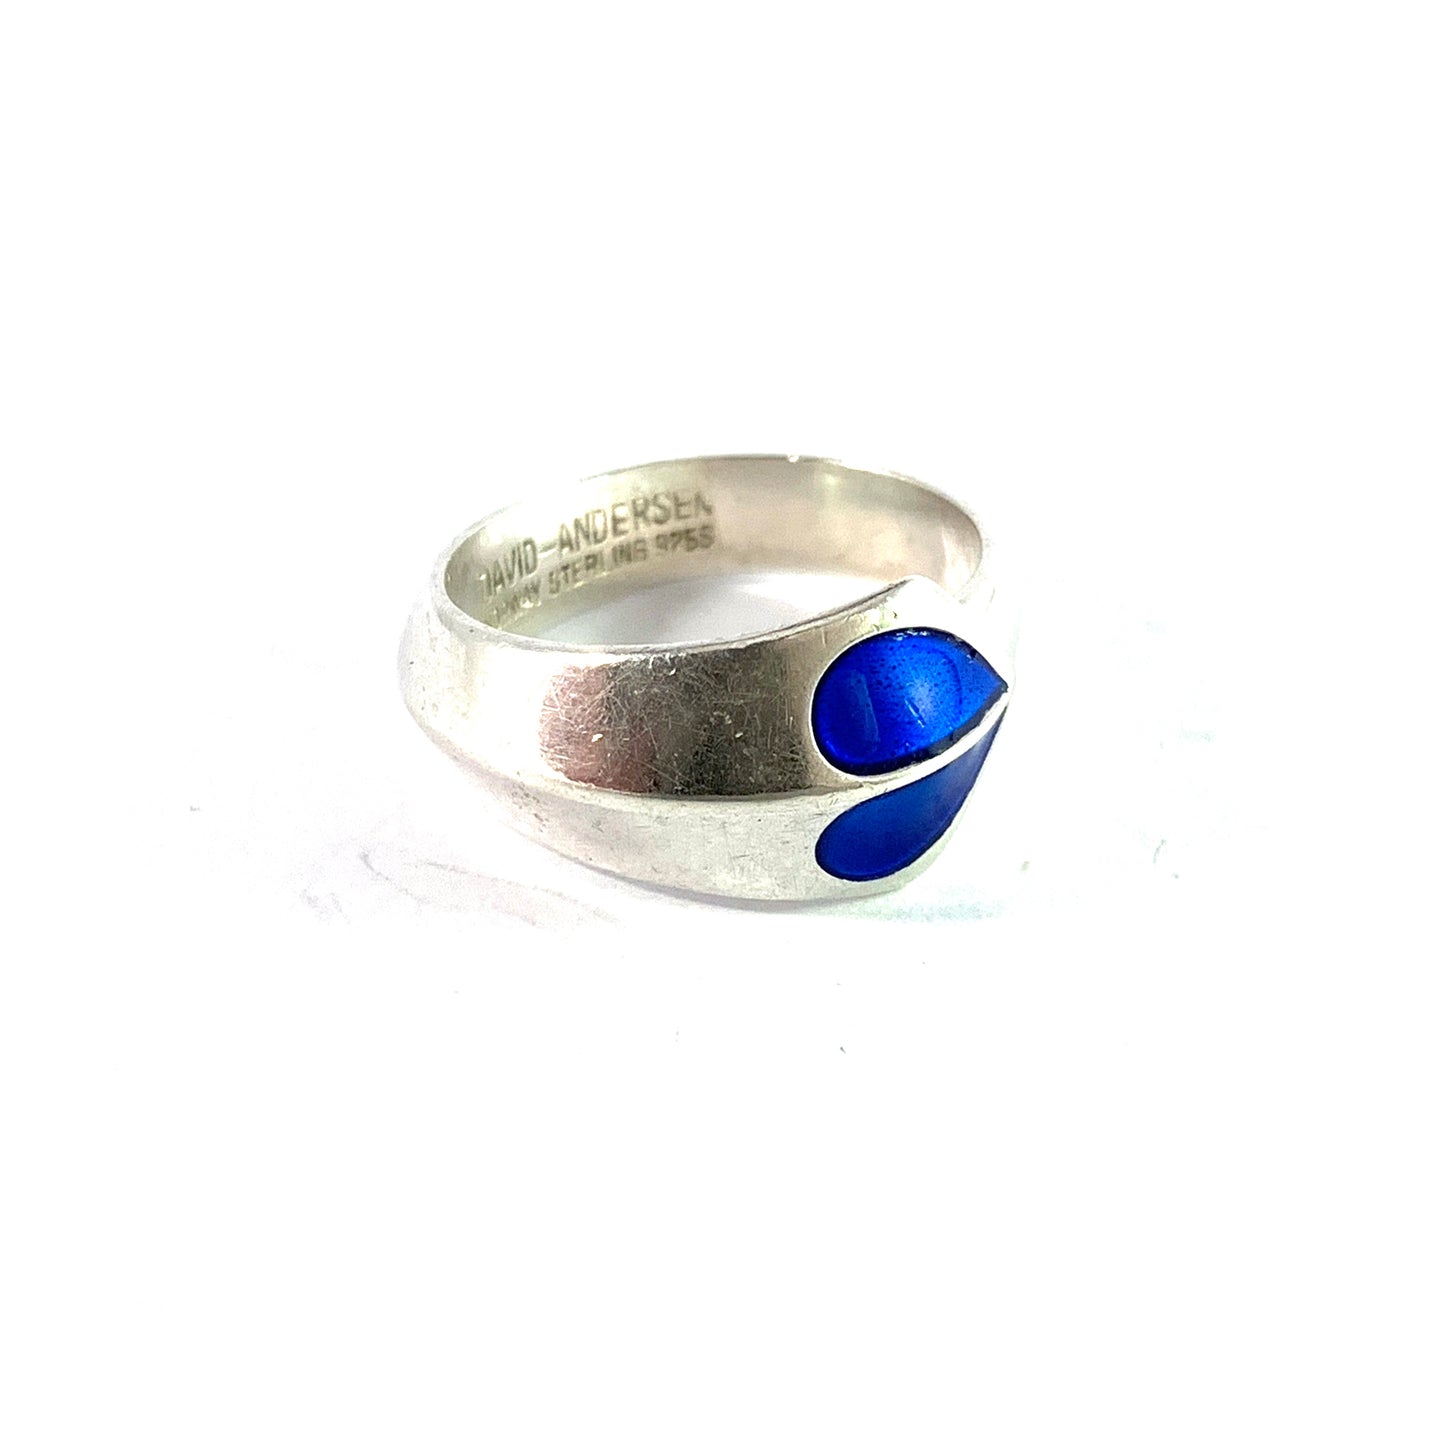 David-Andersen. Norway. Vintage Sterling Silver Blue Enamel Adjustable Size Ring.